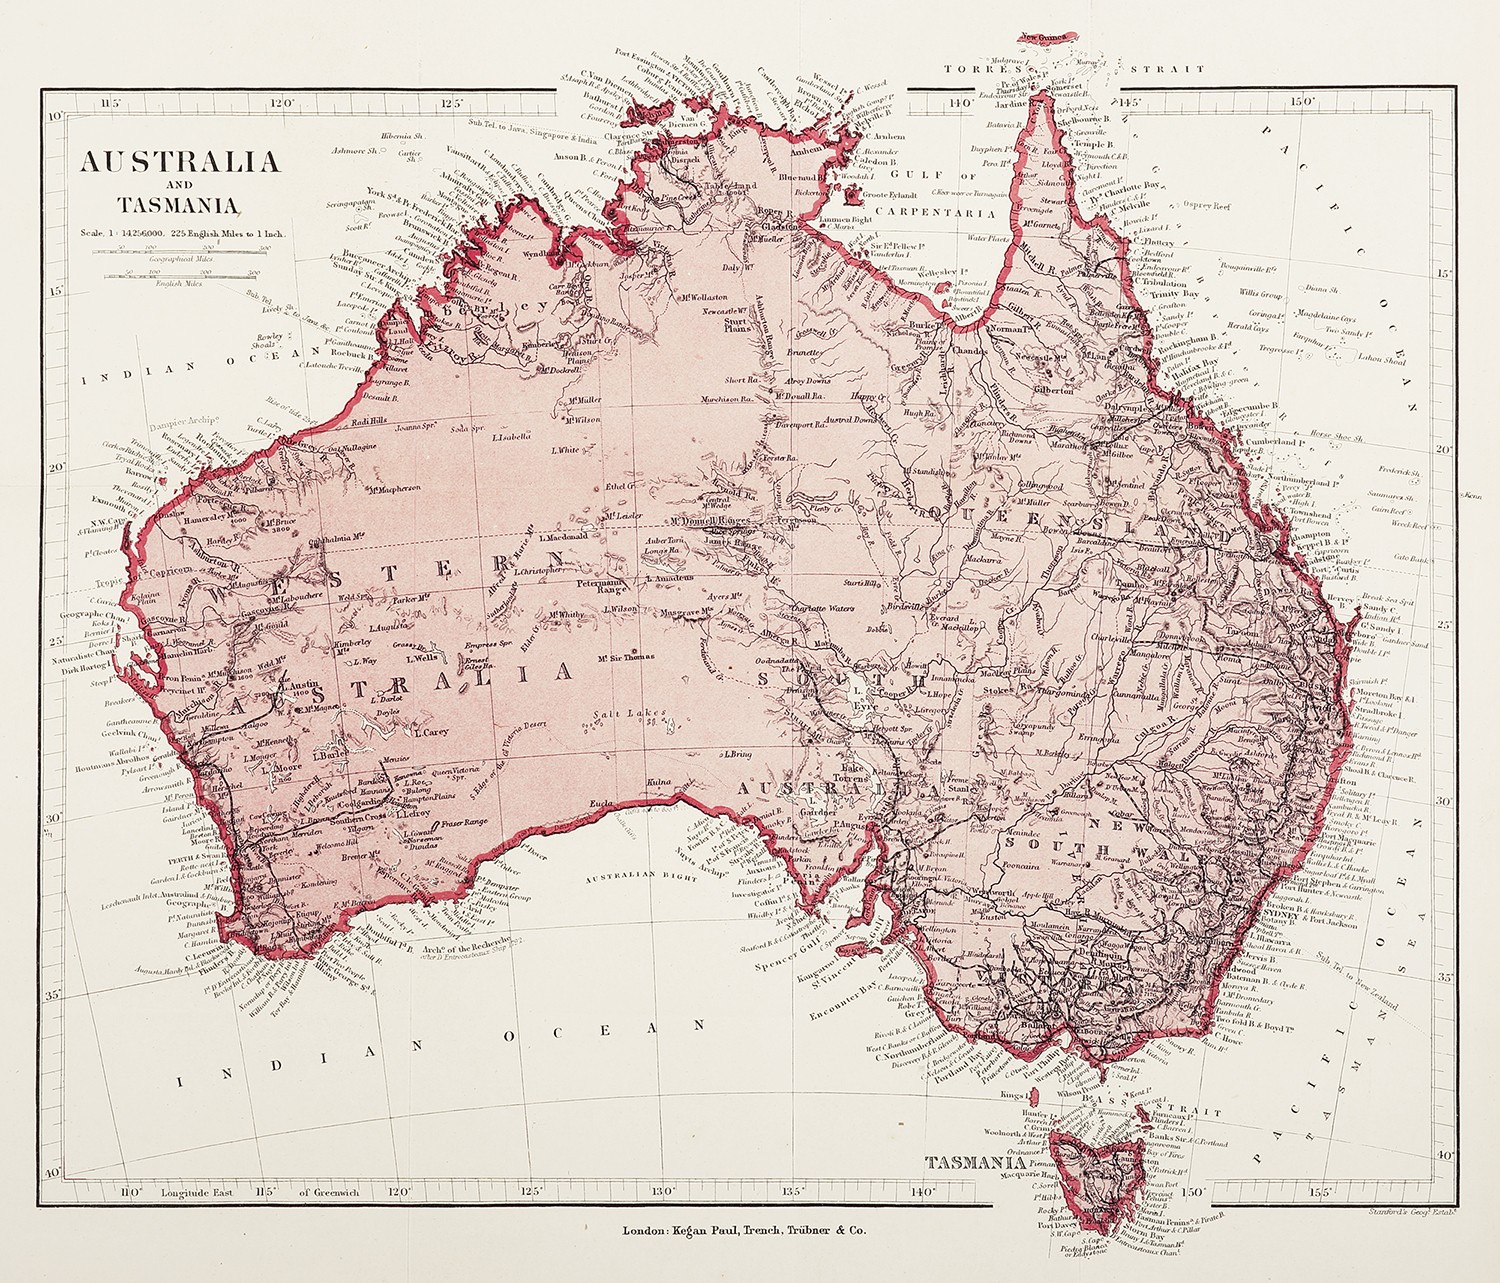 Australia and Tasmania - Antique Map from 1900